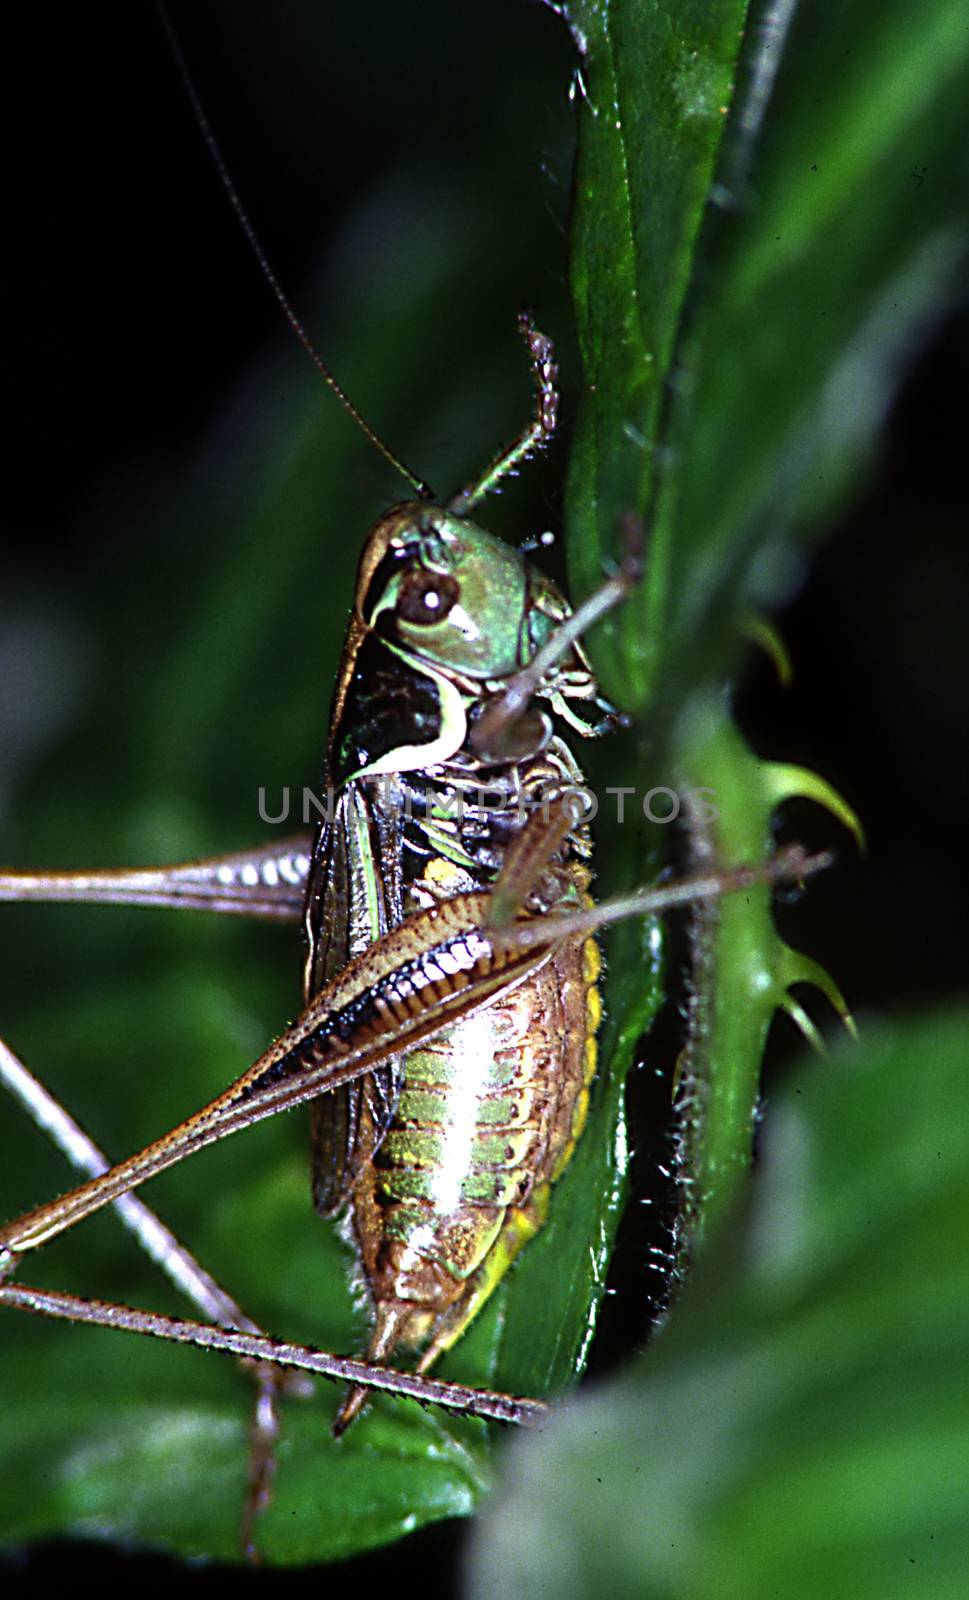 Rösel's grasshopper bite on grass by Dr-Lange